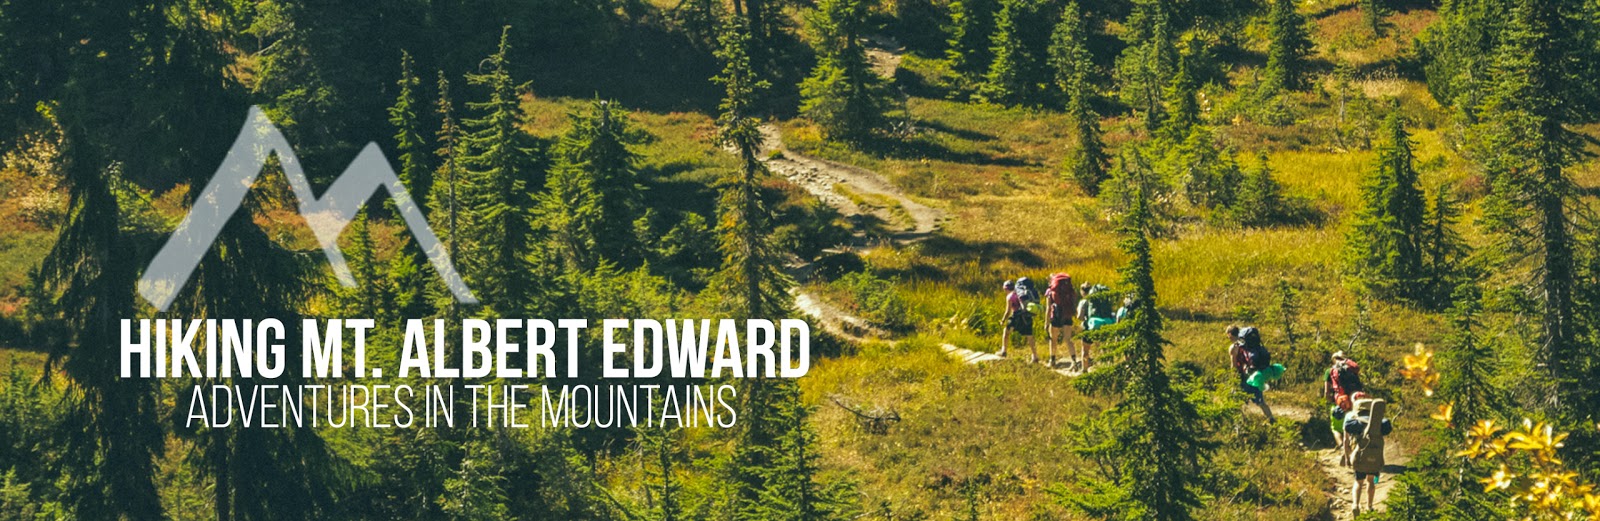 kaleo 2015: Hiking Mt. Albert Edward - Adventures in the Mountains